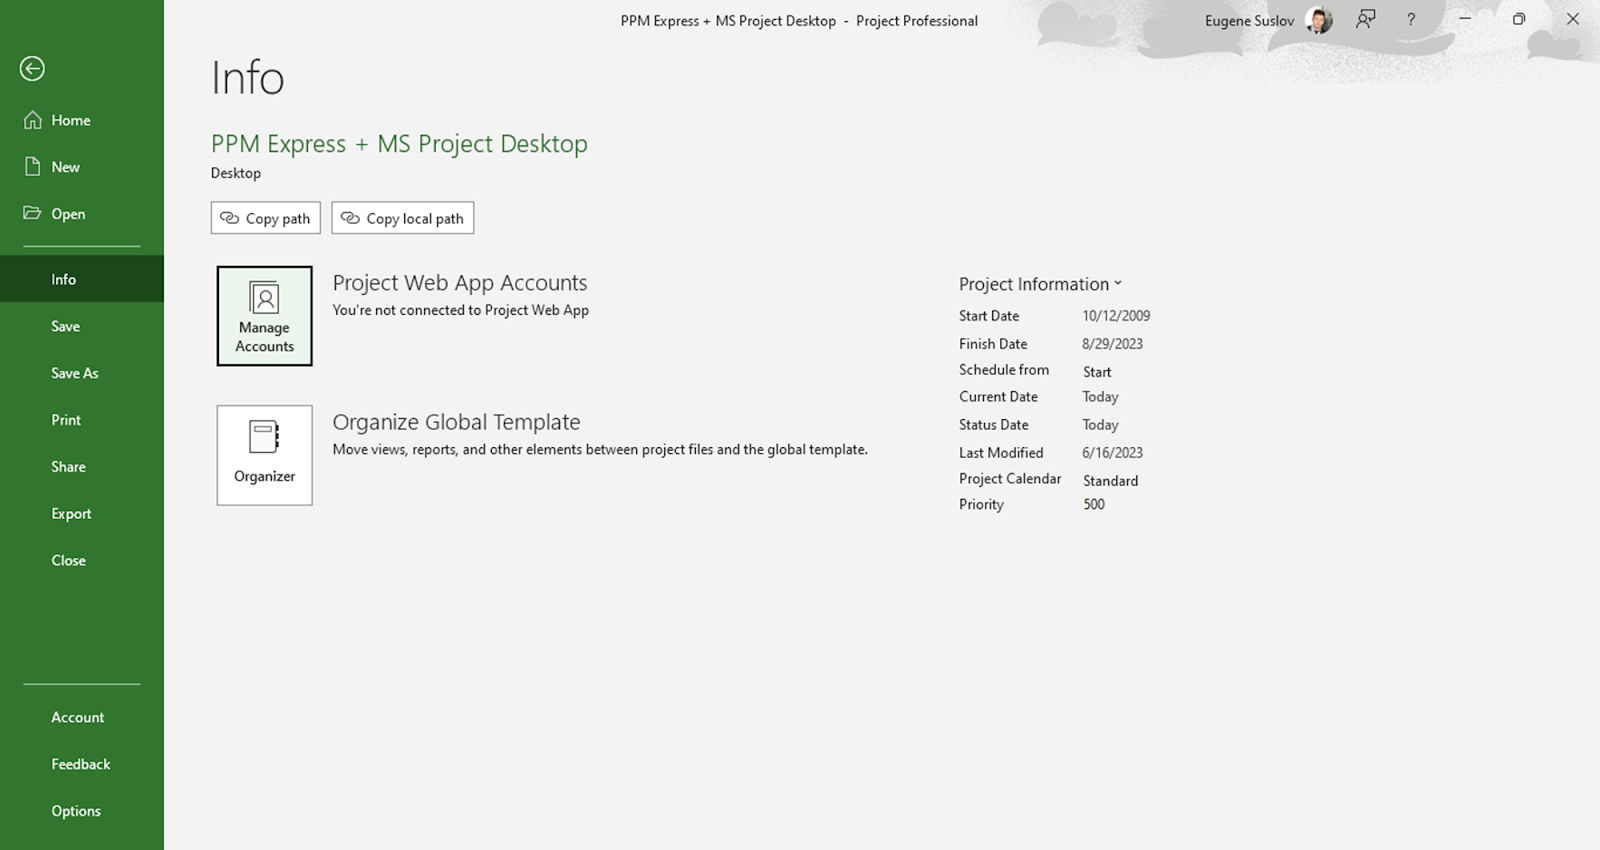 Managing accounts in Project Desktop